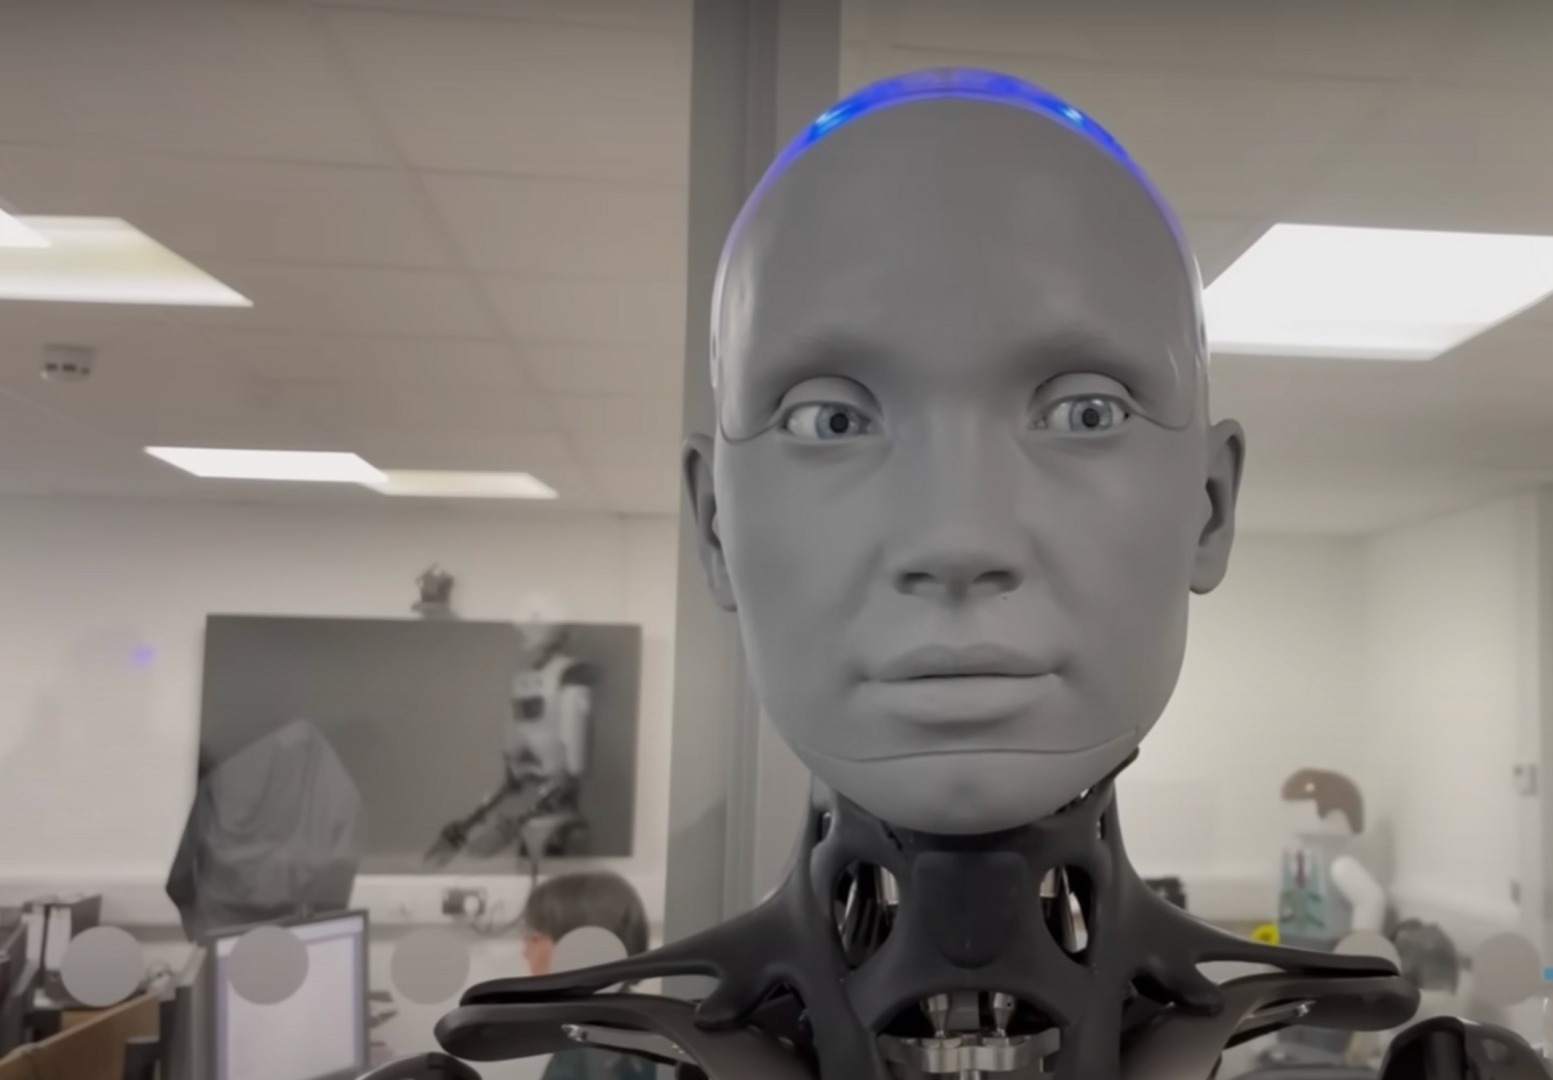 Ameca: The Paradigm of Advanced Humanoid Robotics Envisions an Optimistic Future for Humanity